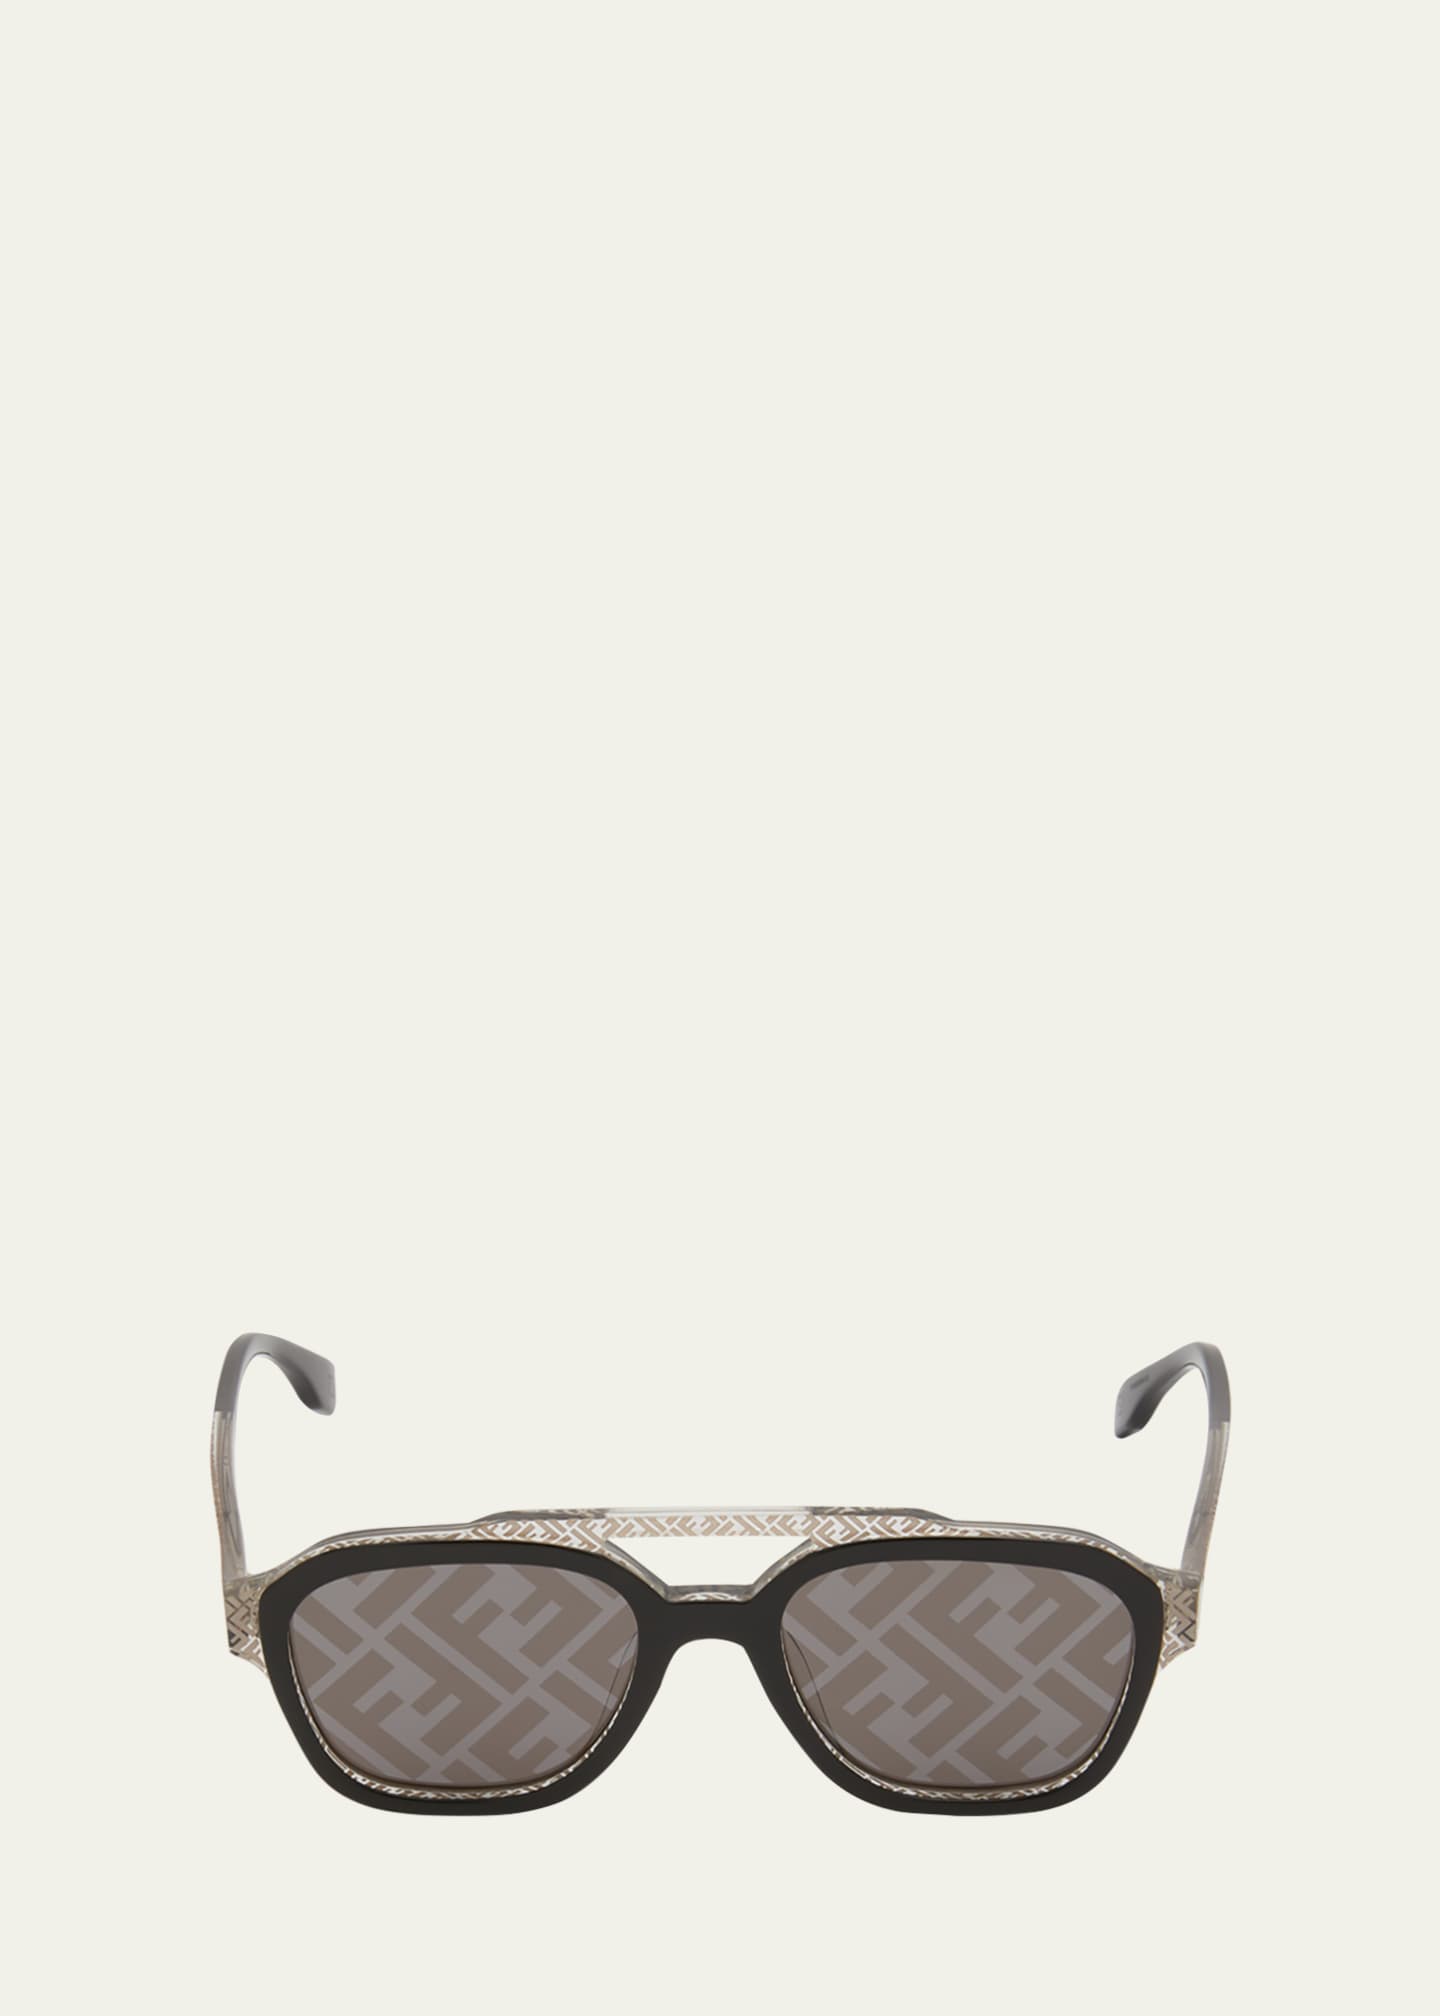 Fendi Men's Double-Bridge Geometric Logo Sunglasses